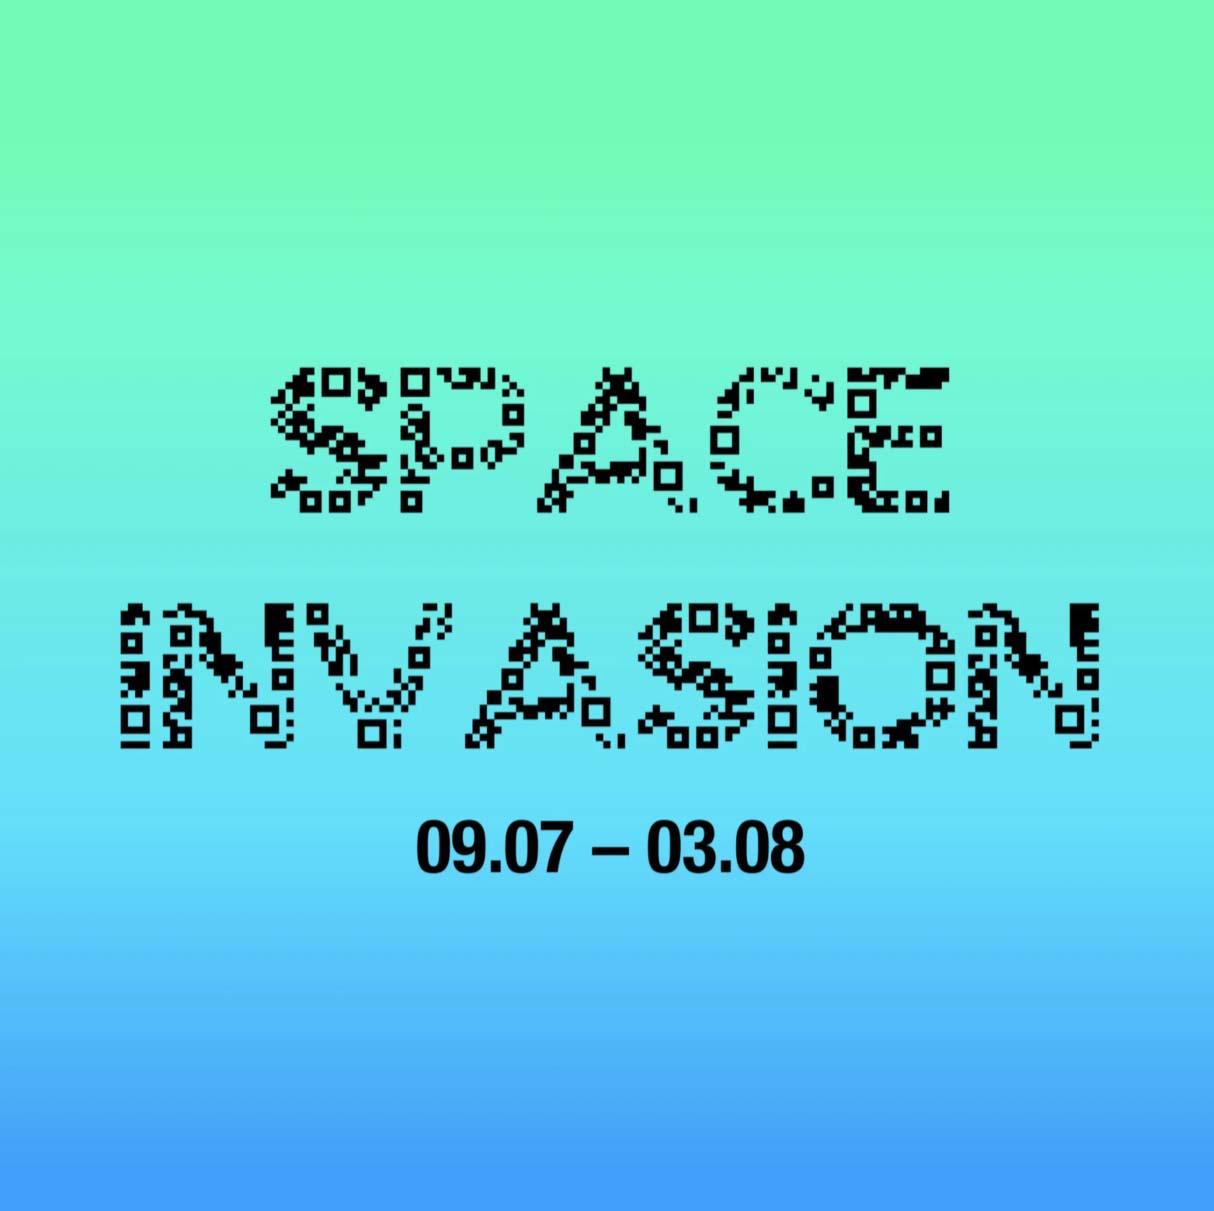 Space Invasion 3